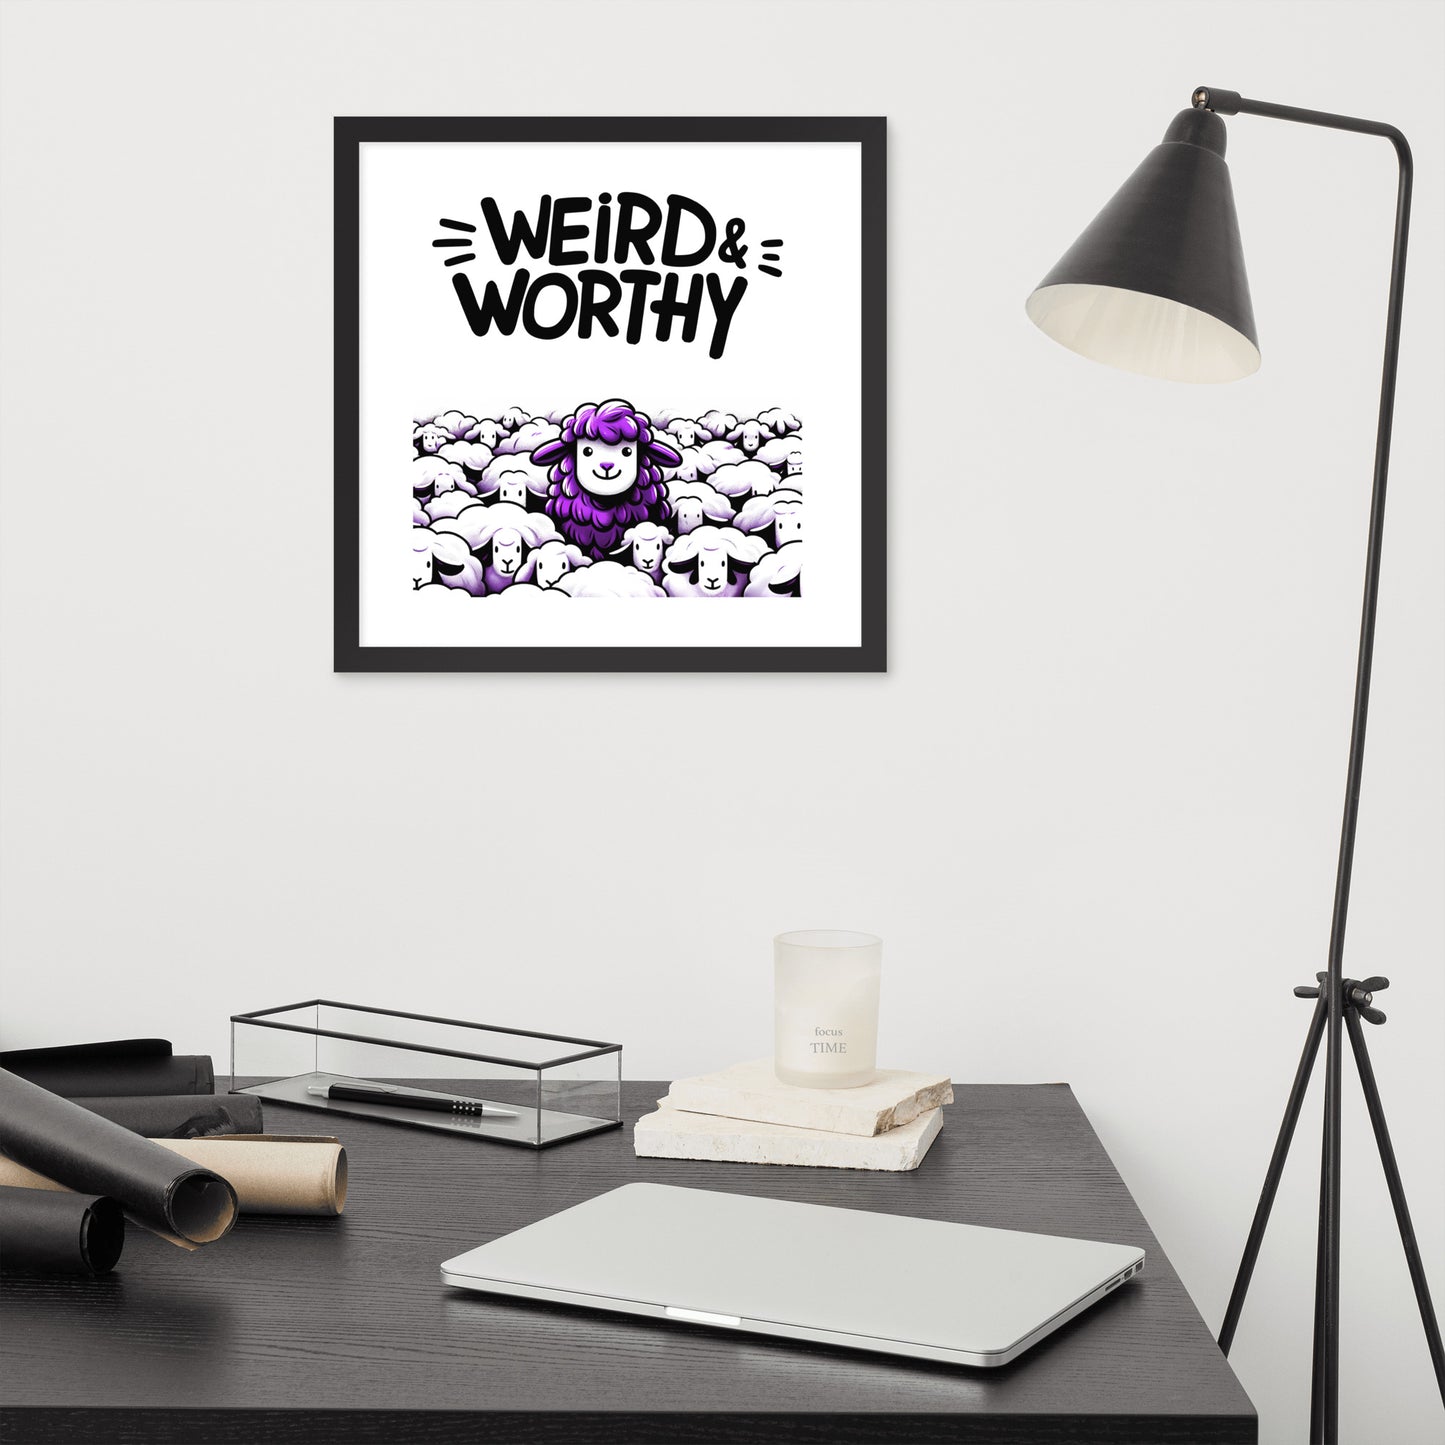 GWMS "Weird & Worthy" Framed poster